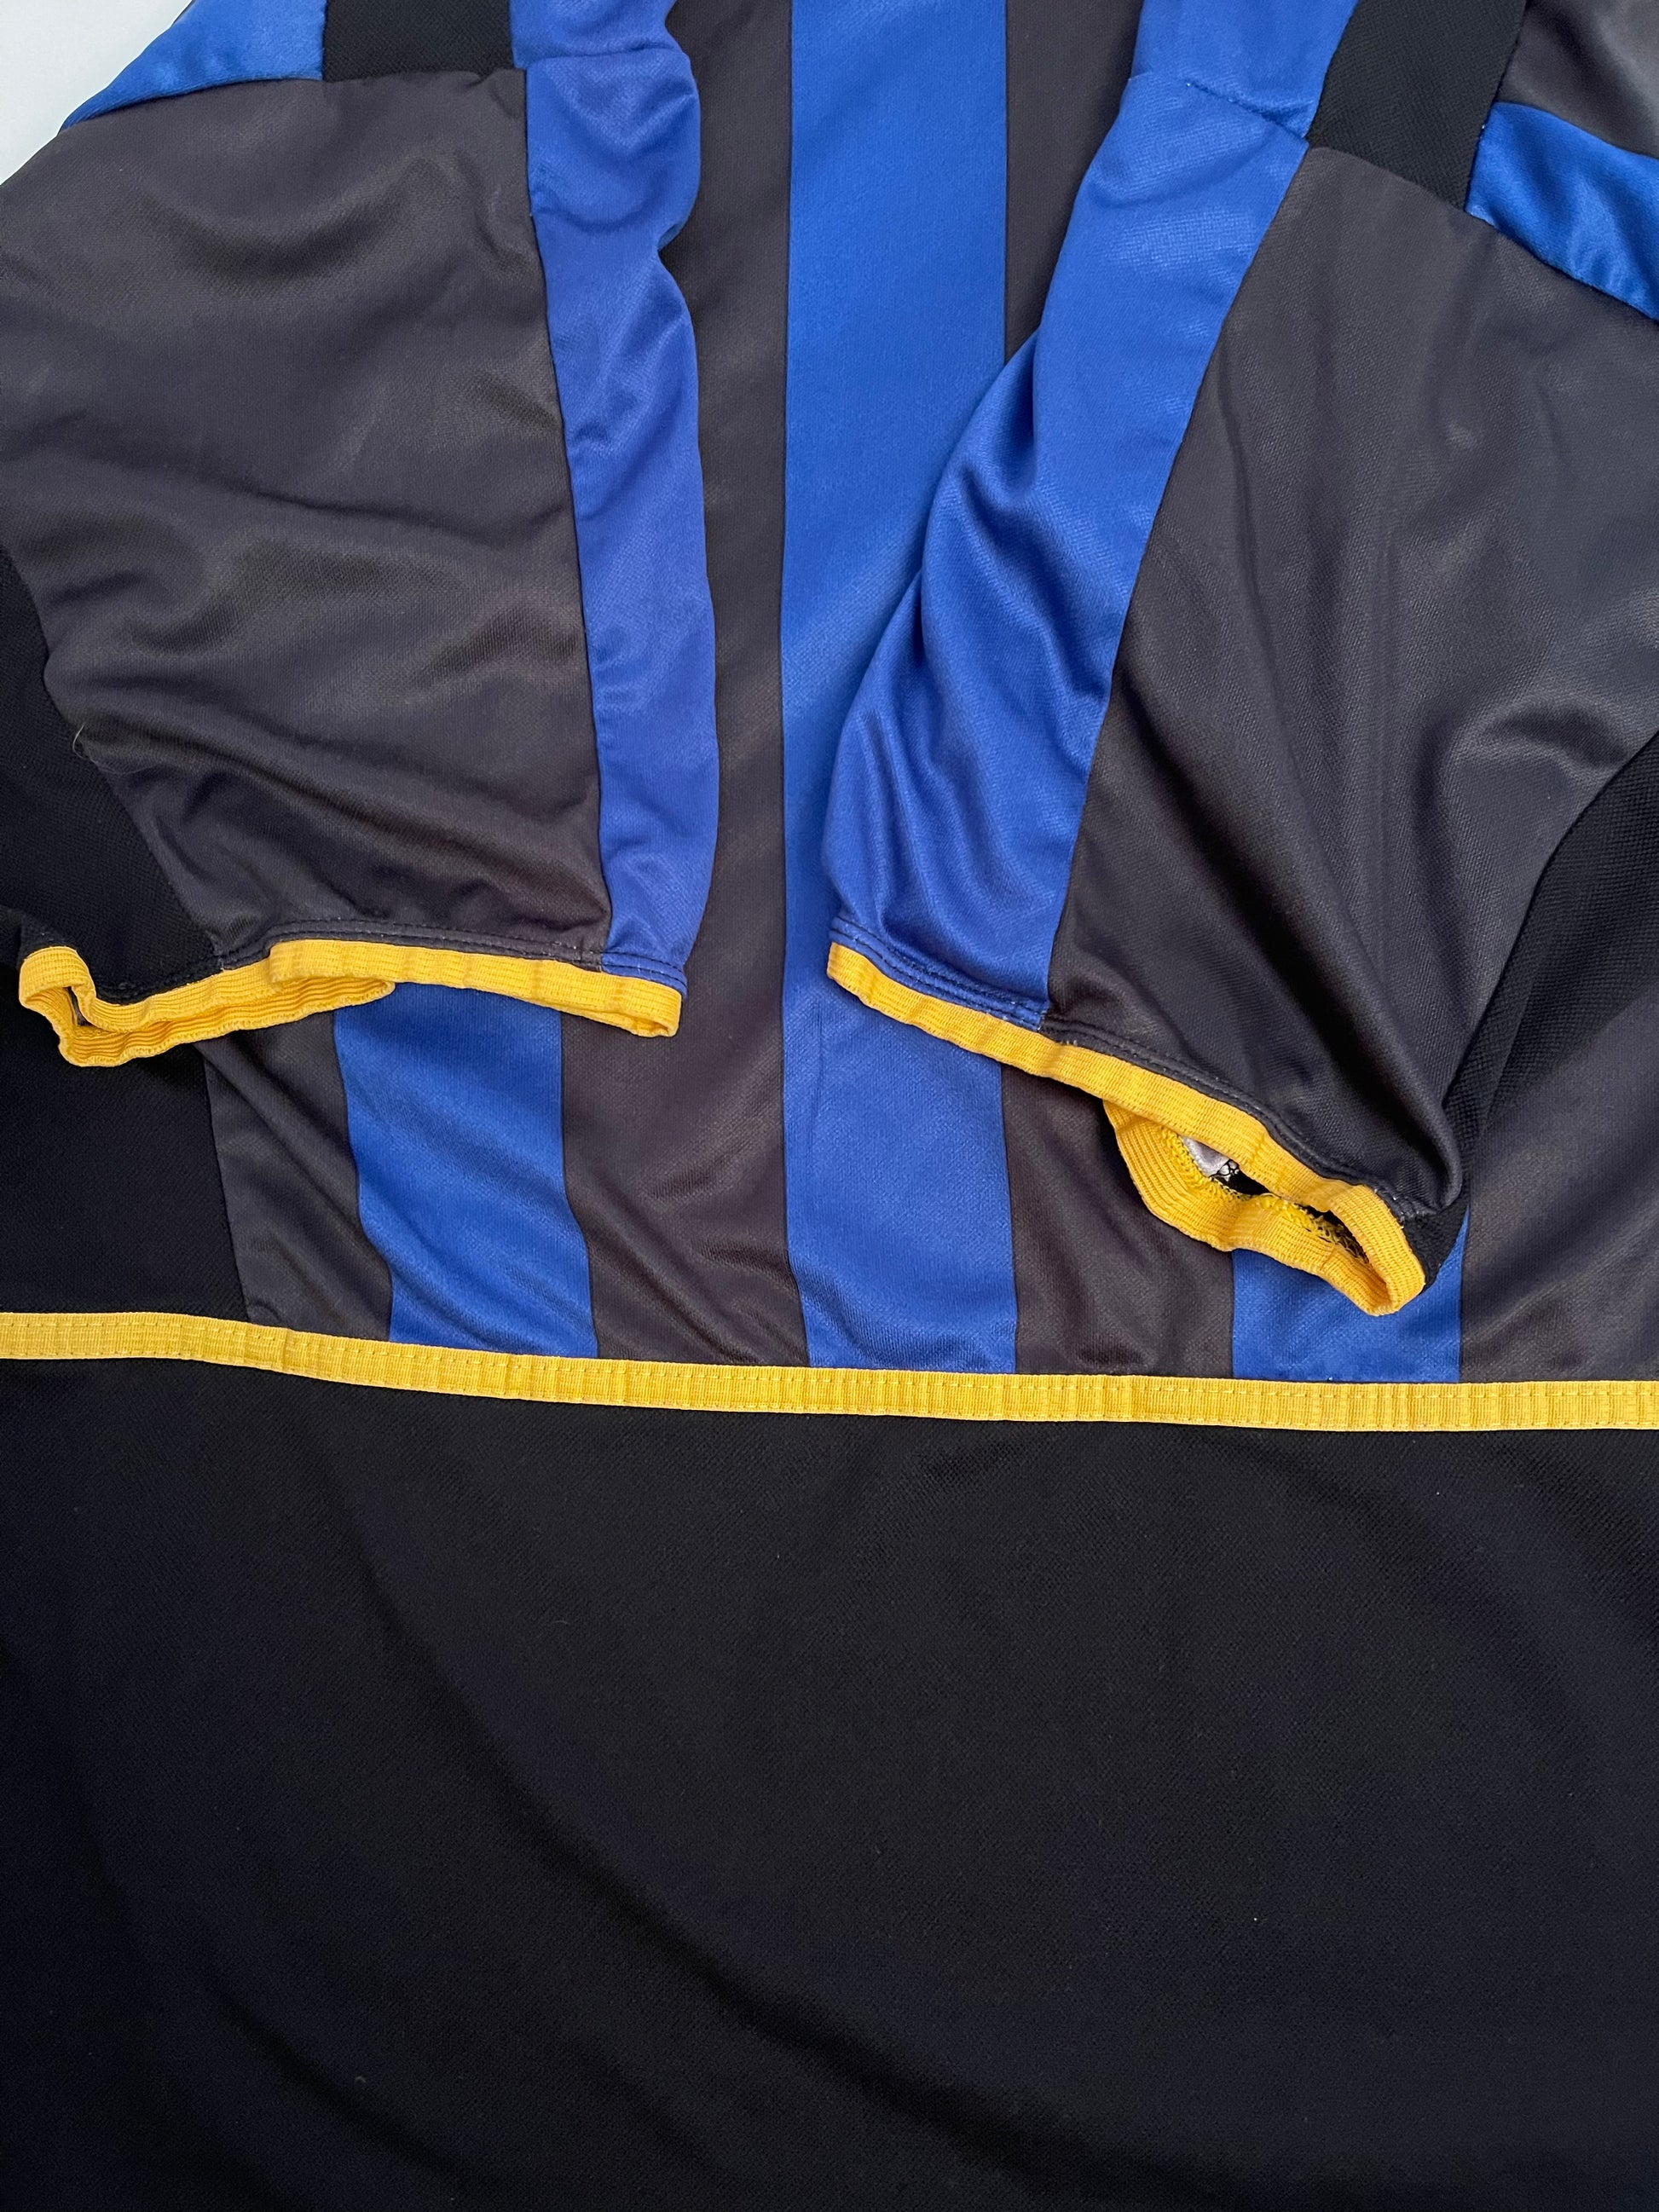 Inter Milano Nike 2002-2003 Home Football Shirt Size XL Pirelli Black Blue